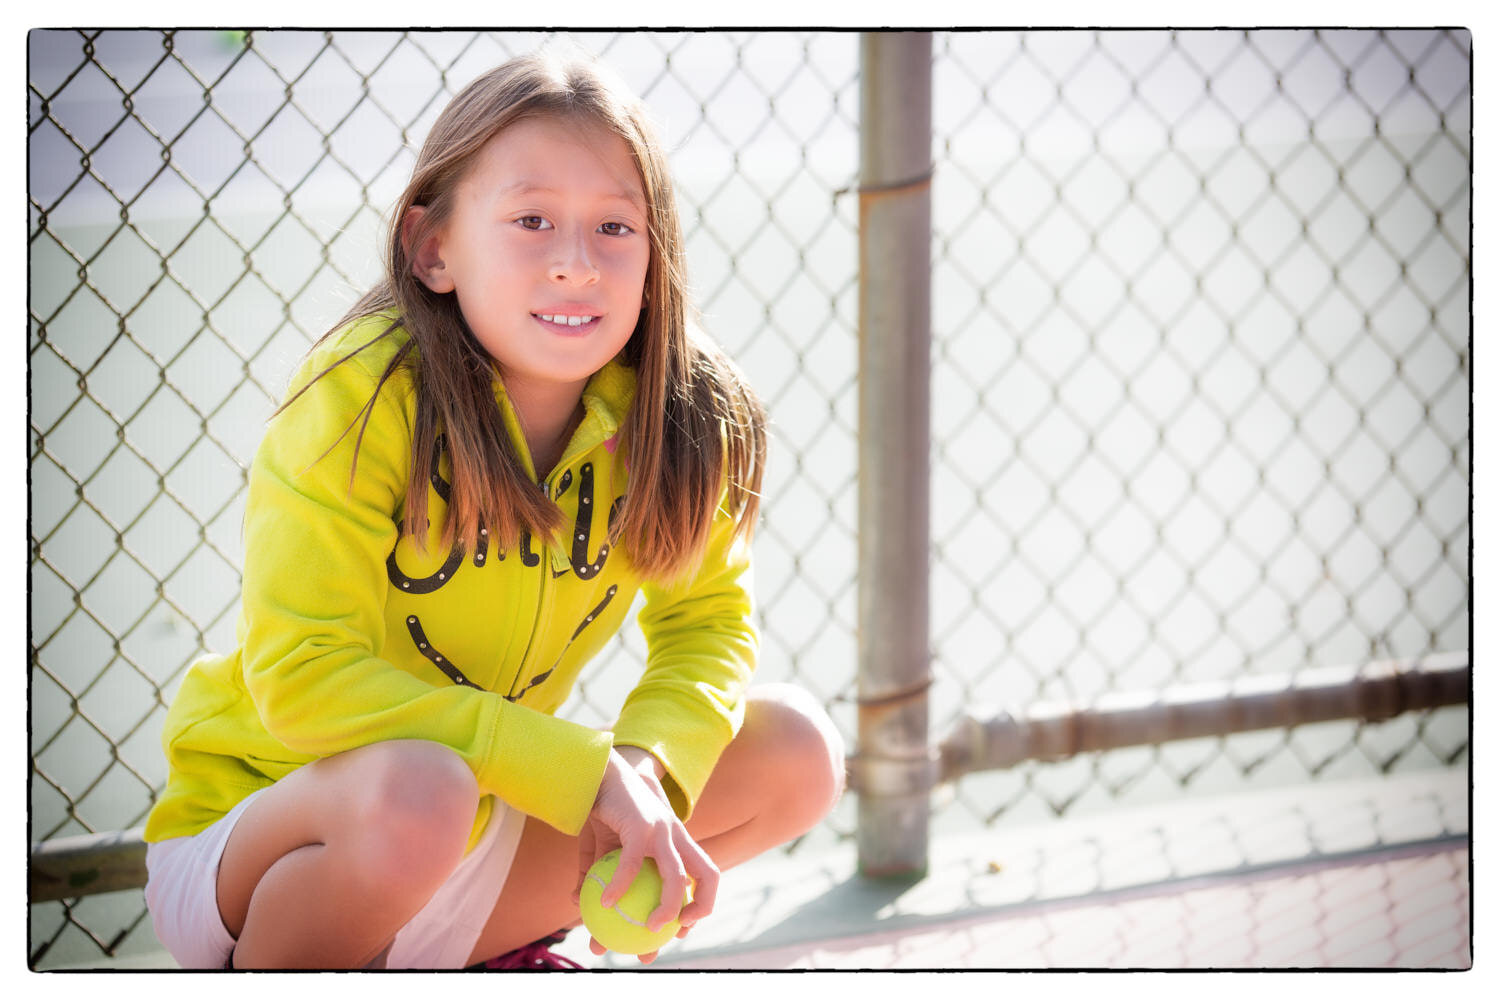 Long-Beach-girl-portrait-yellow-jacket.jpg